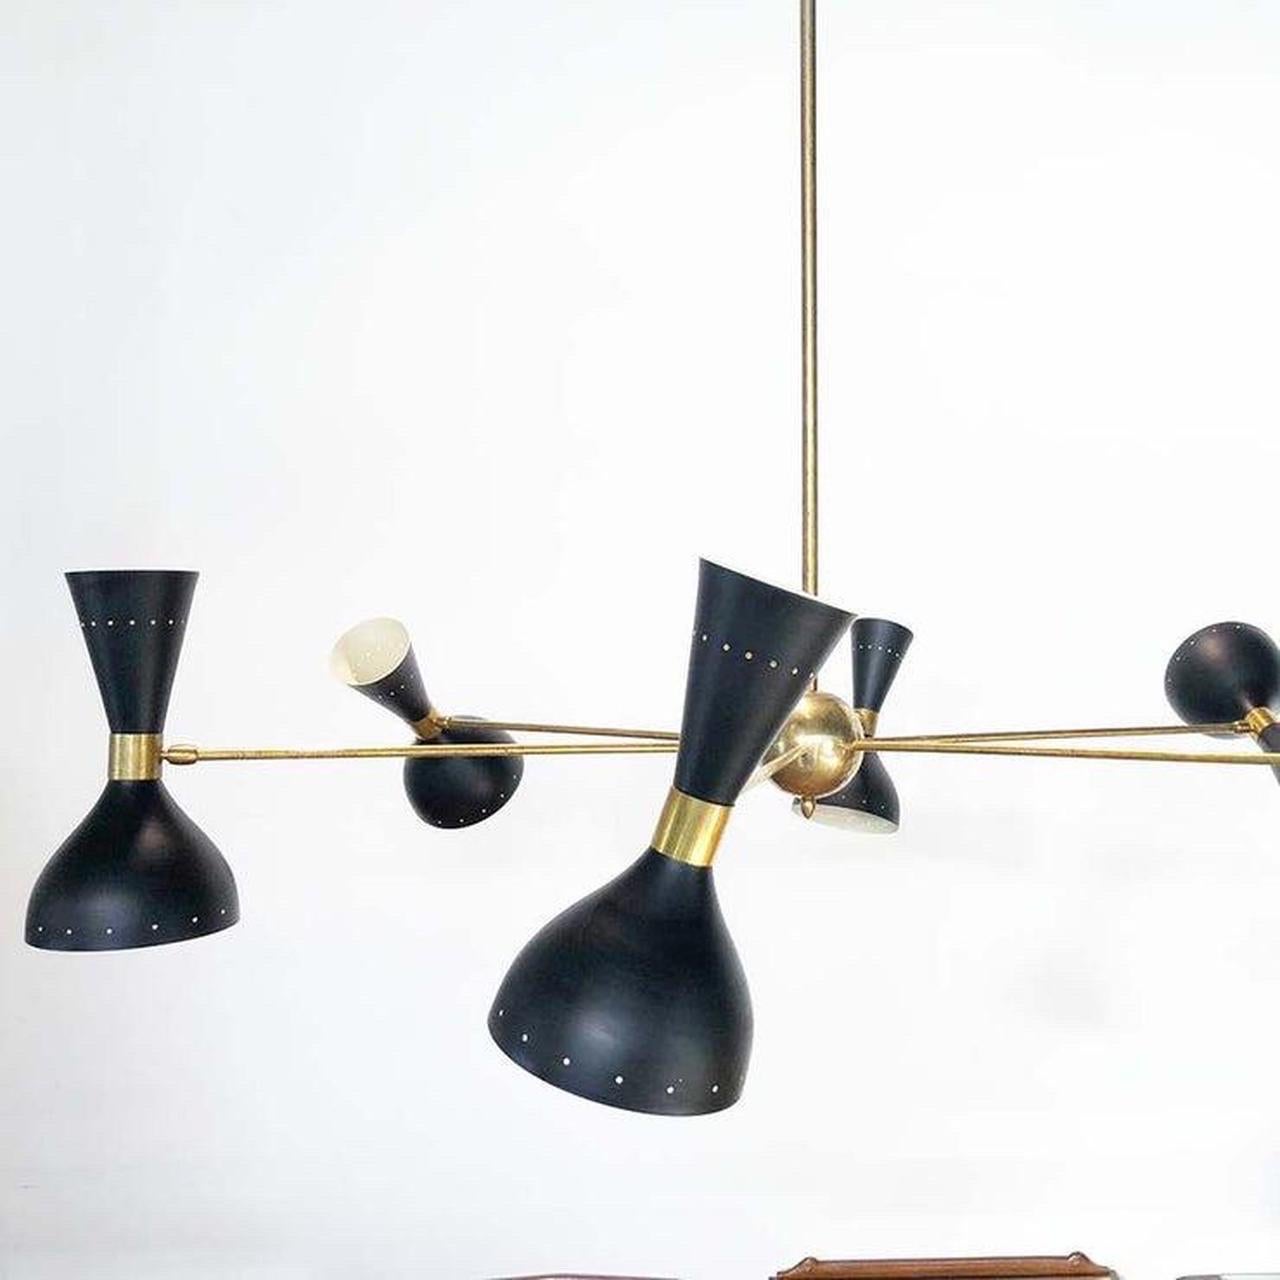 Big black chandelier stilnovo - design -

Materials: brass, metal 

Measurements: cm 120 x cm 100 H.